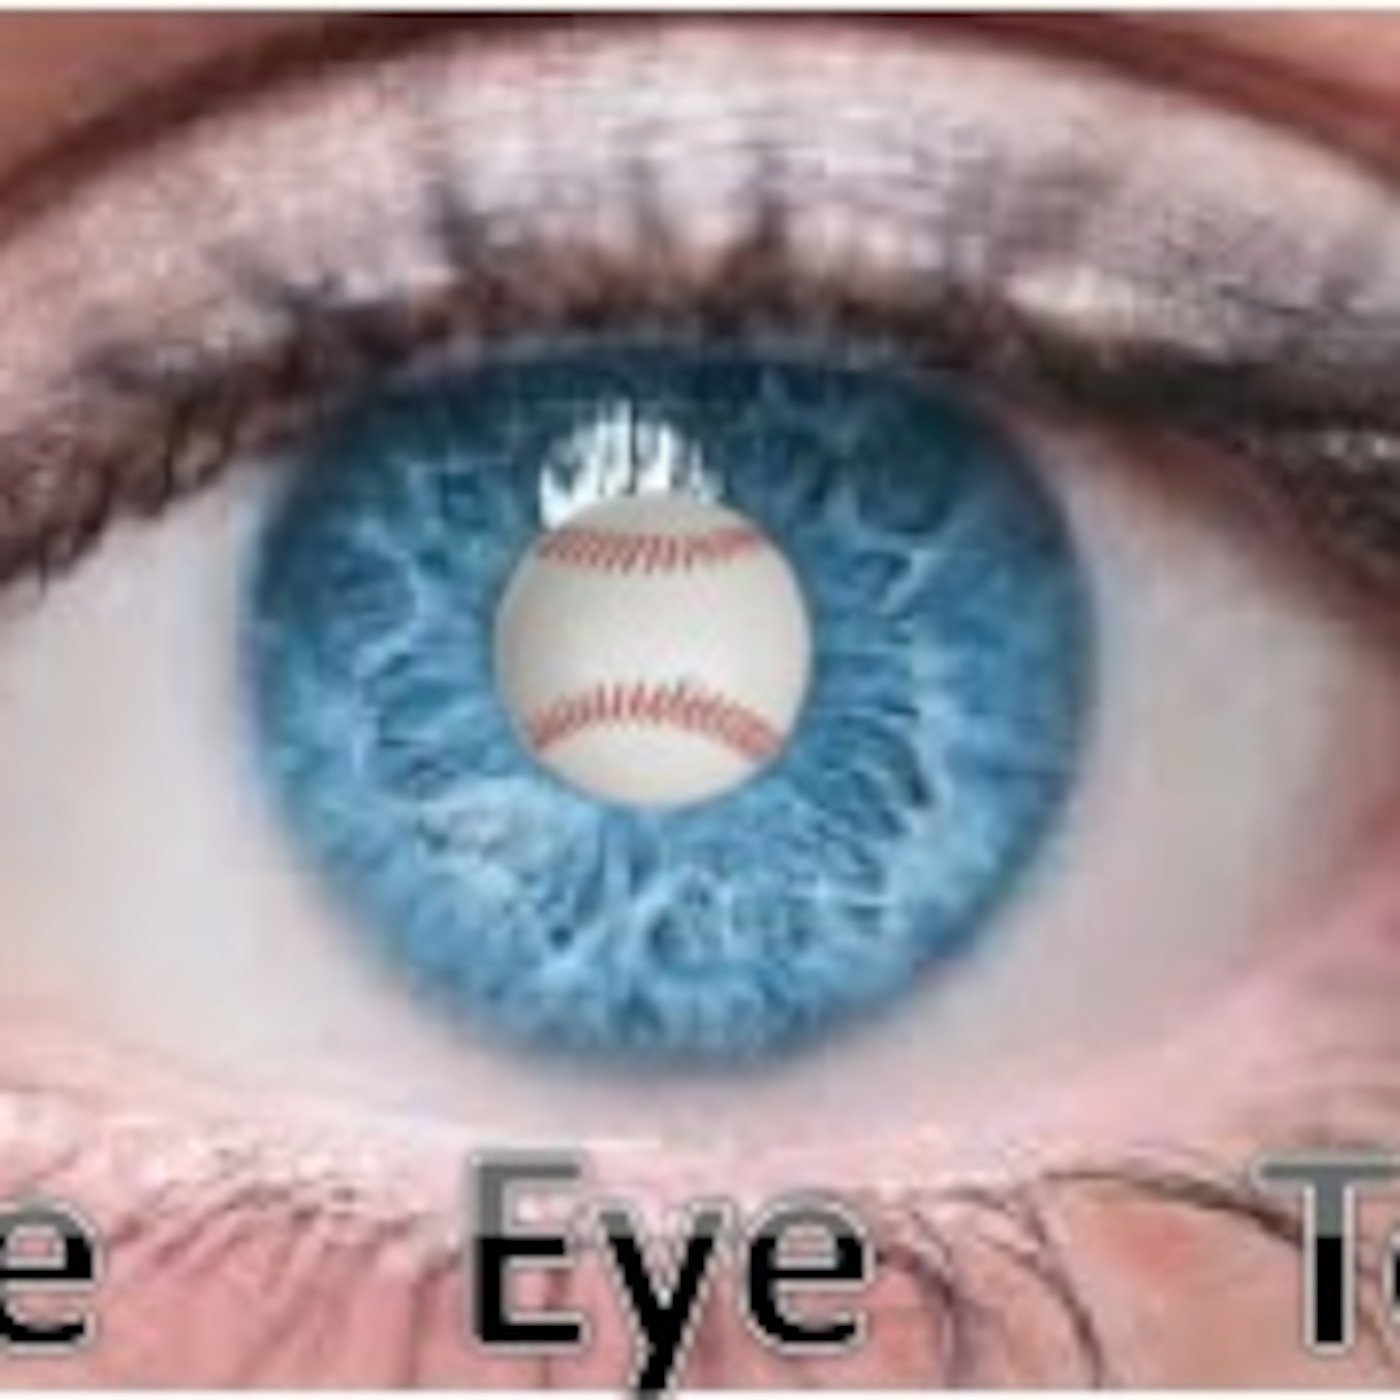 The Eye Test